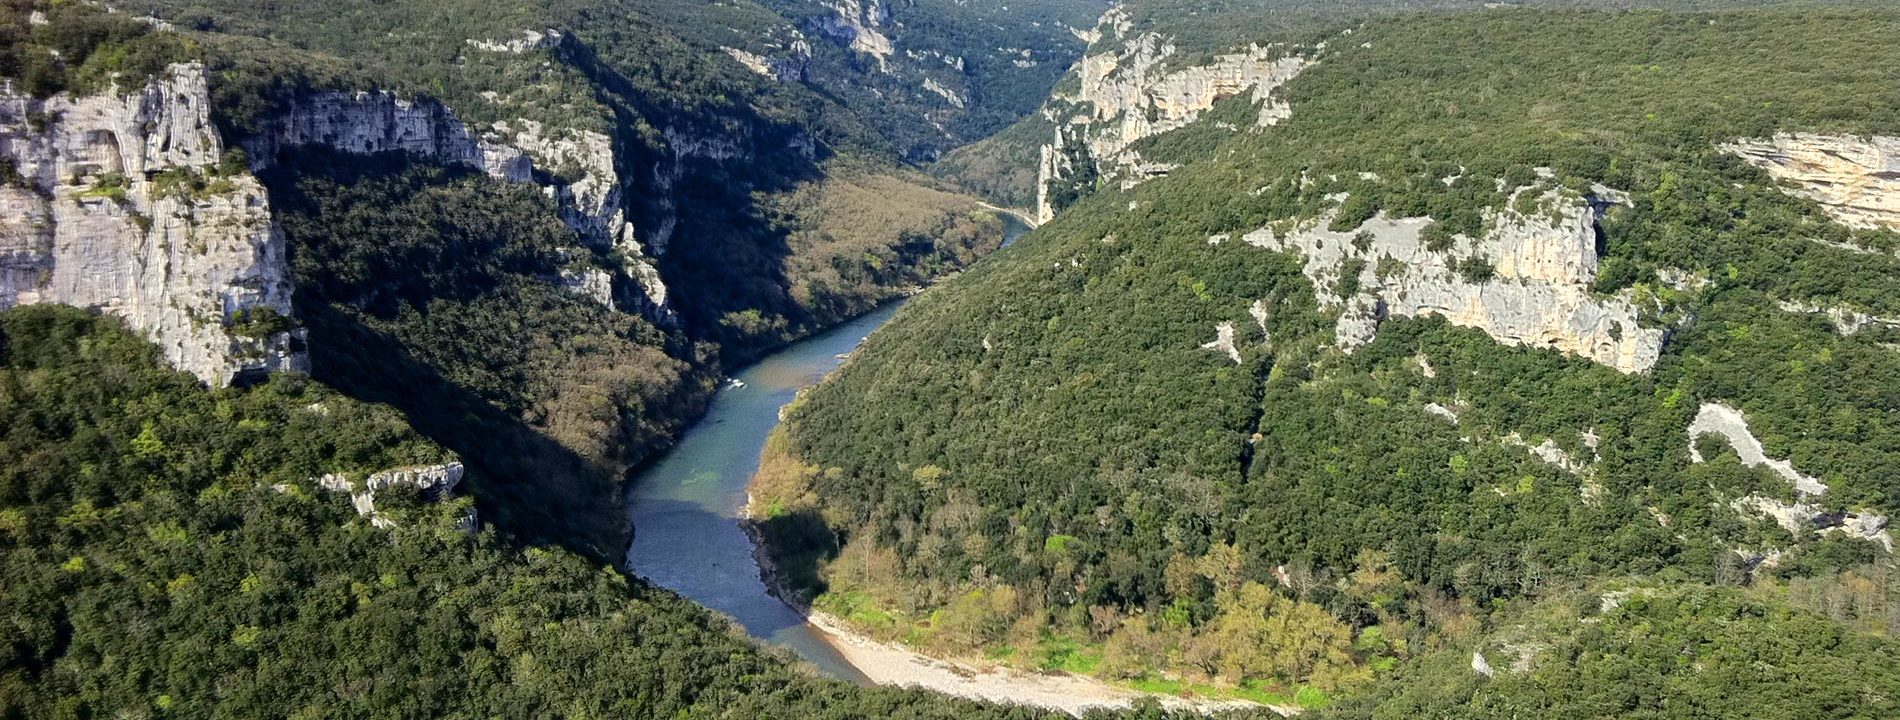 Kano - Kajak van Châmes naar St Martin d'Ardèche - 24 km / 1 dag met Rivière et Nature